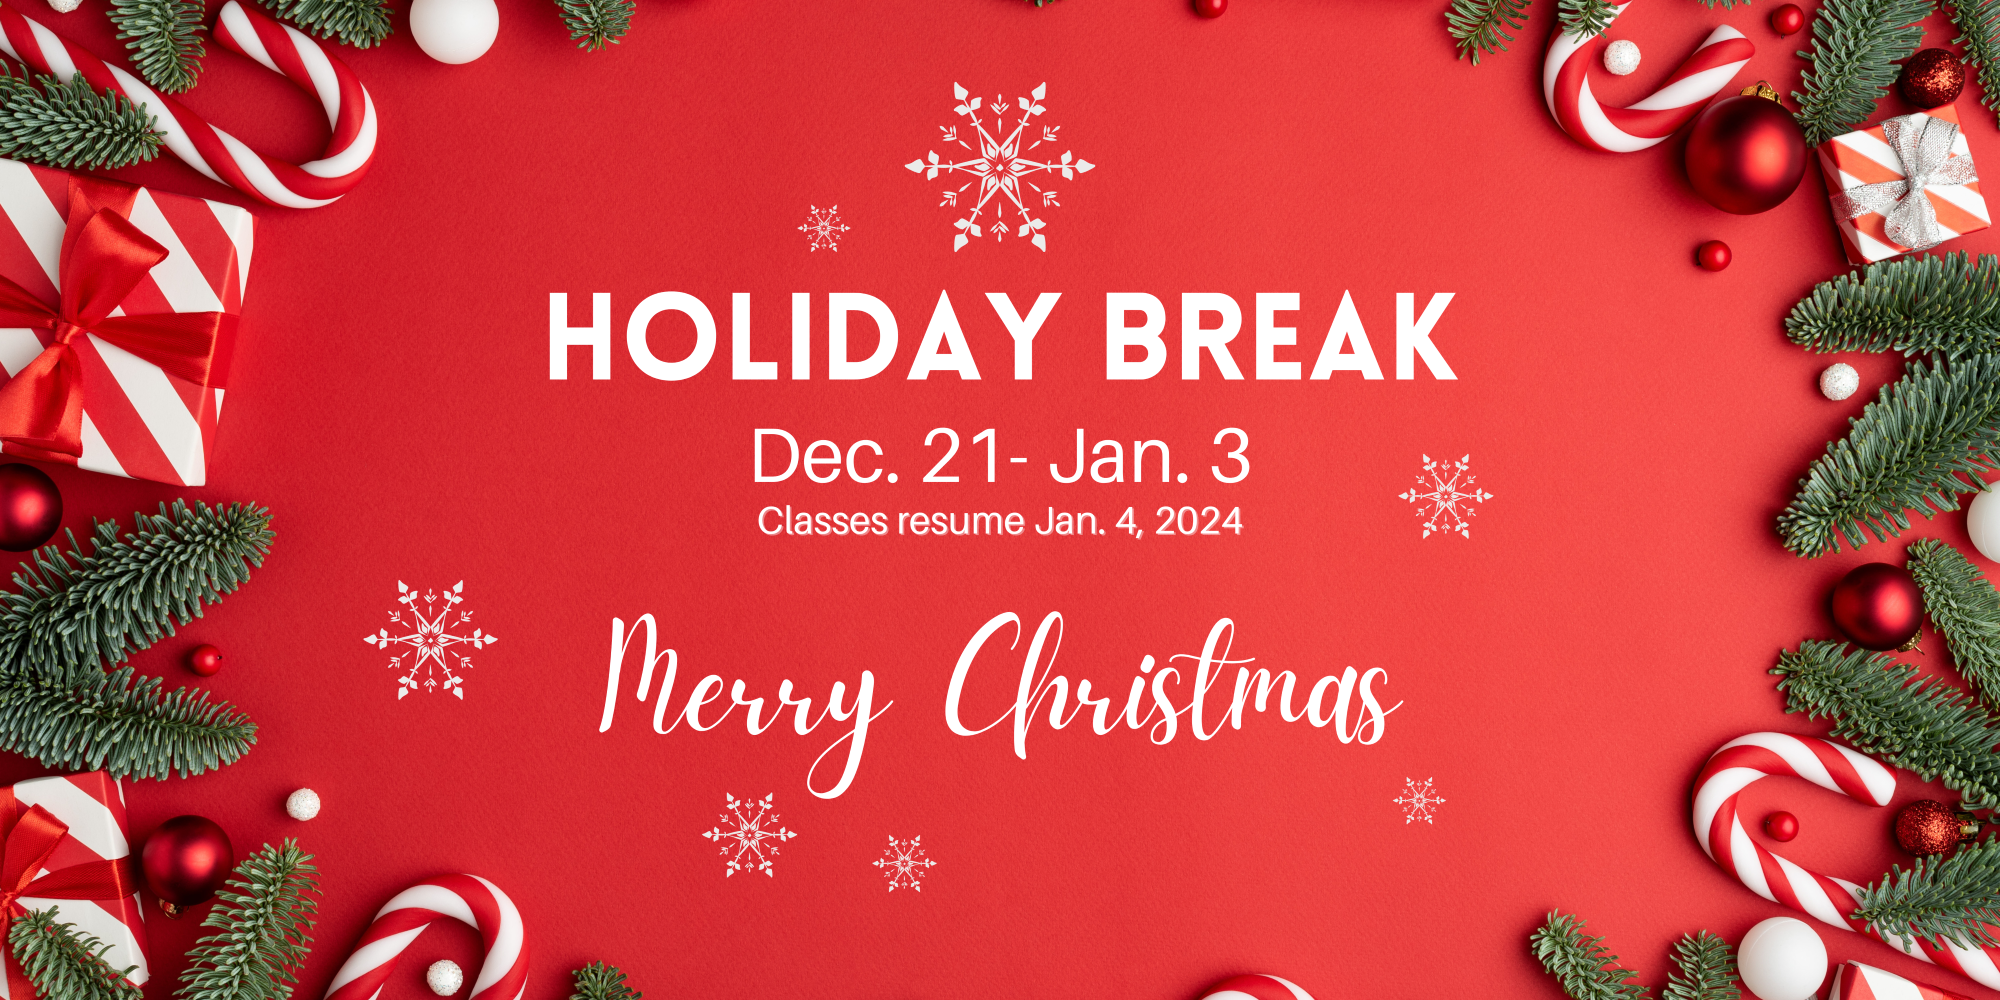 Christmas Break Dec 21 - Jan. 3rd classes resume Jan. 4